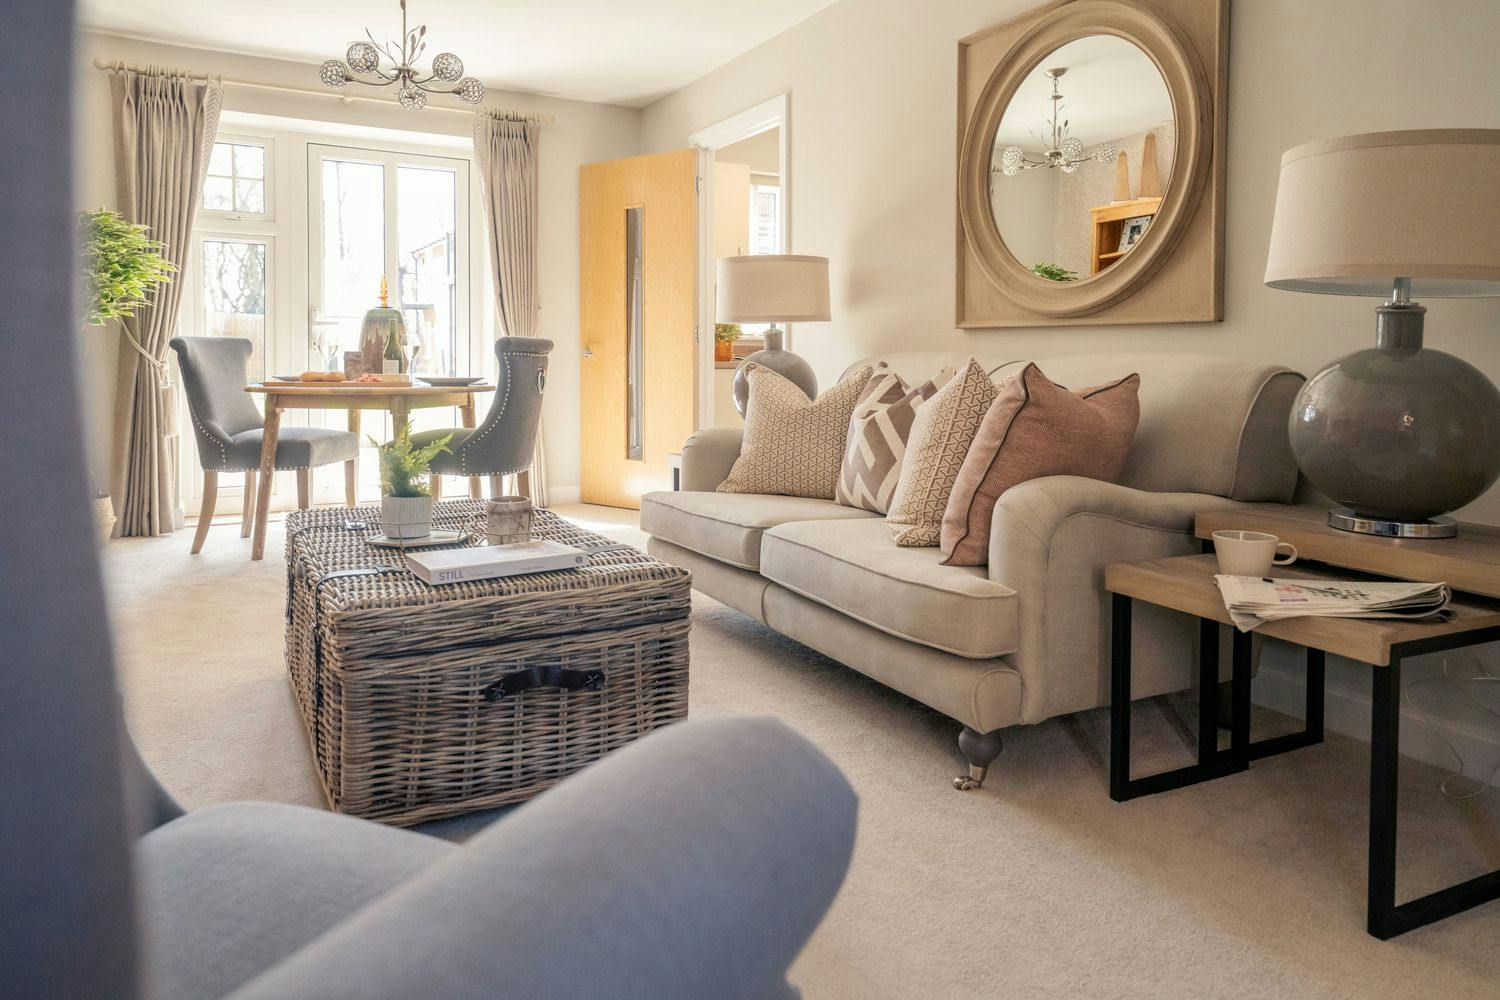 Living Room at Wingfield Court Retirement Development in Sherborne, Dorset